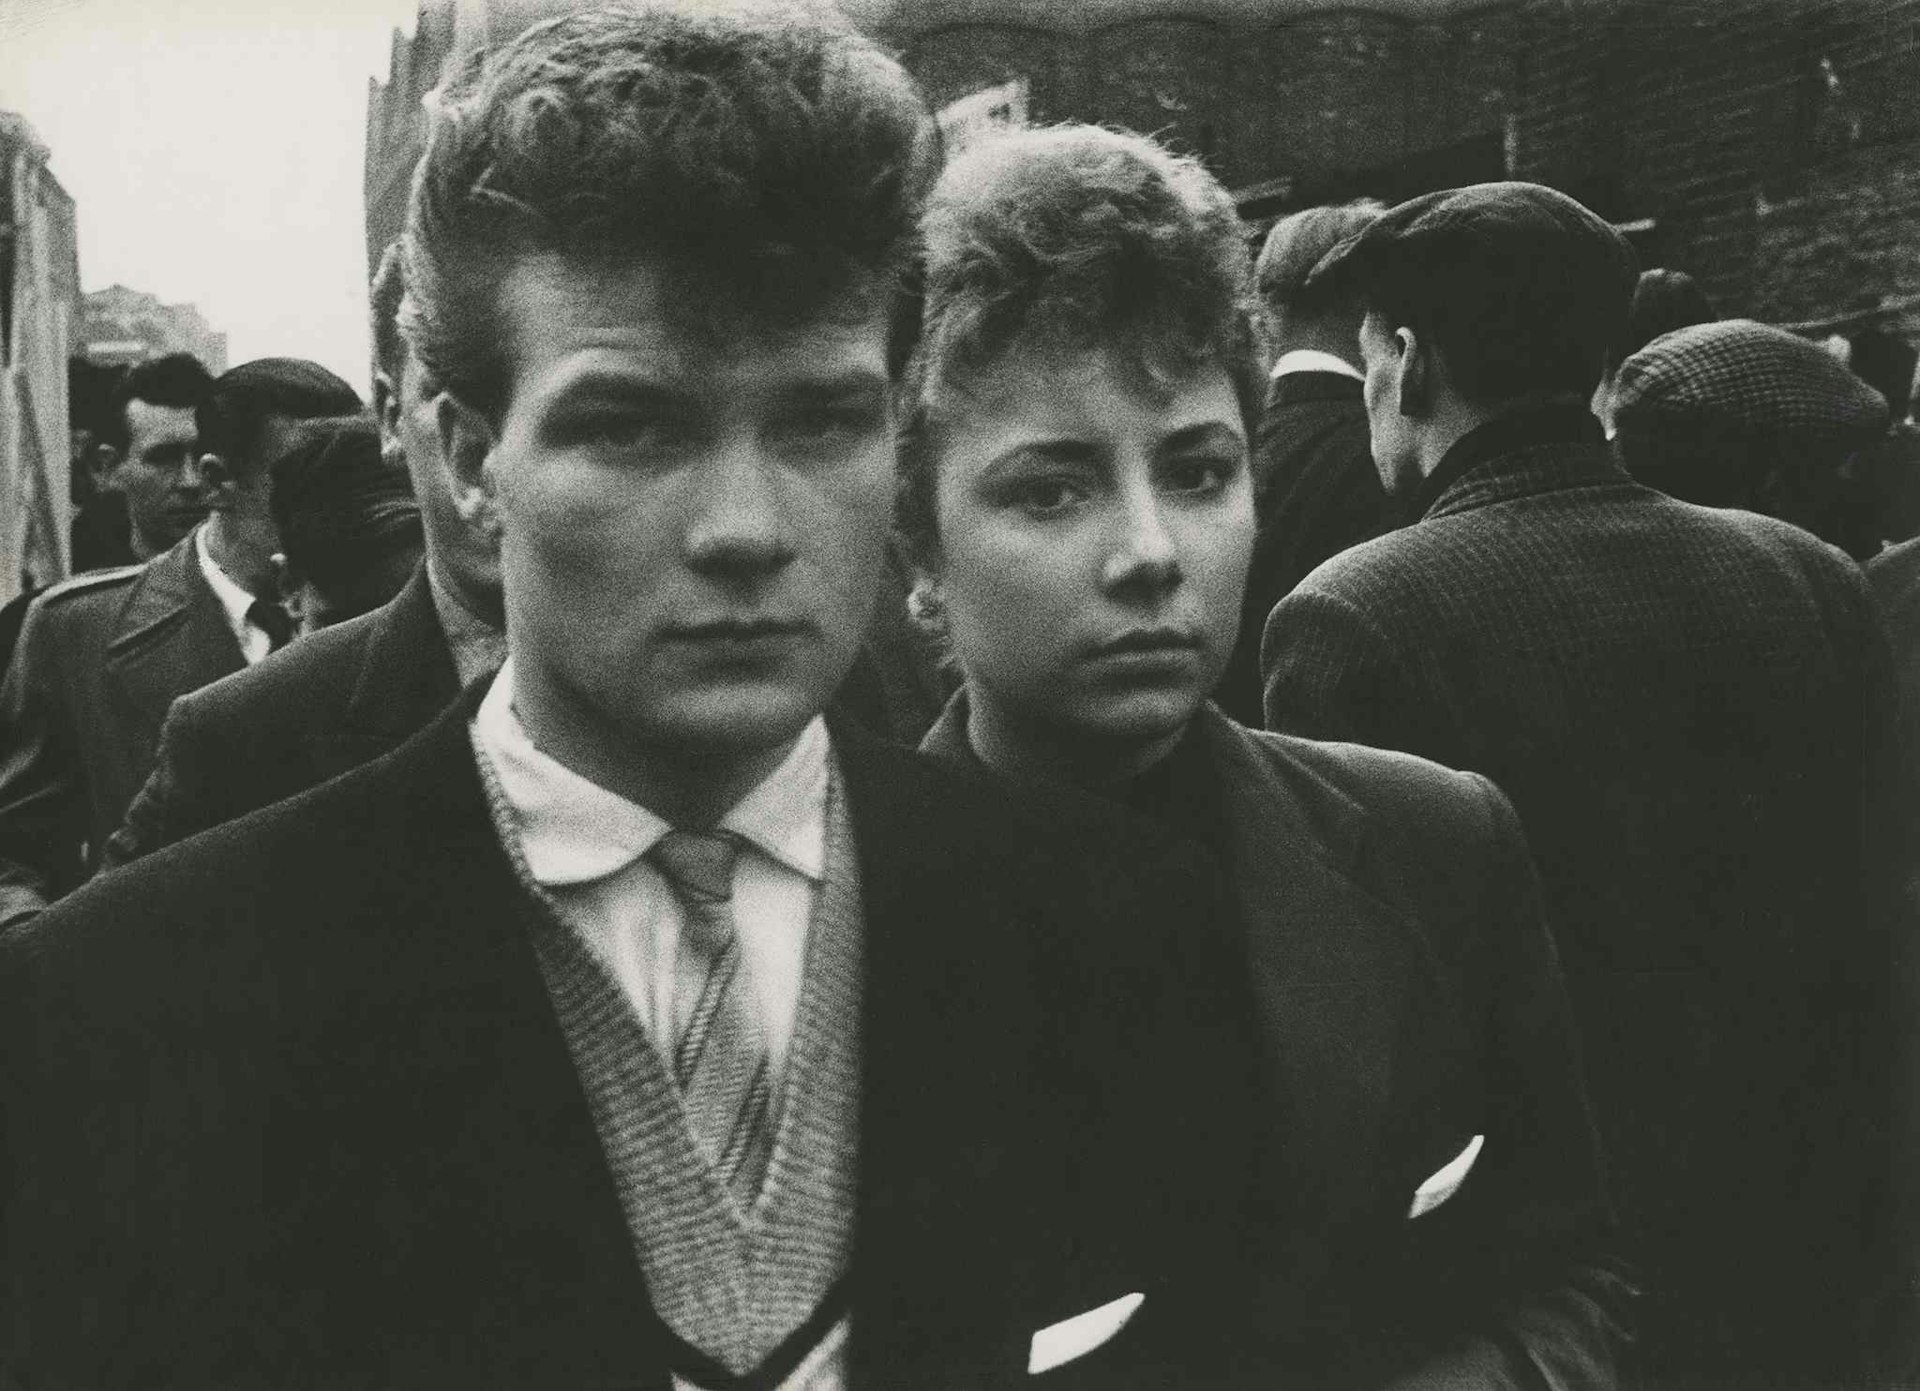 Teddy Boy and Girl, Petticoat Lane, London, 1956.